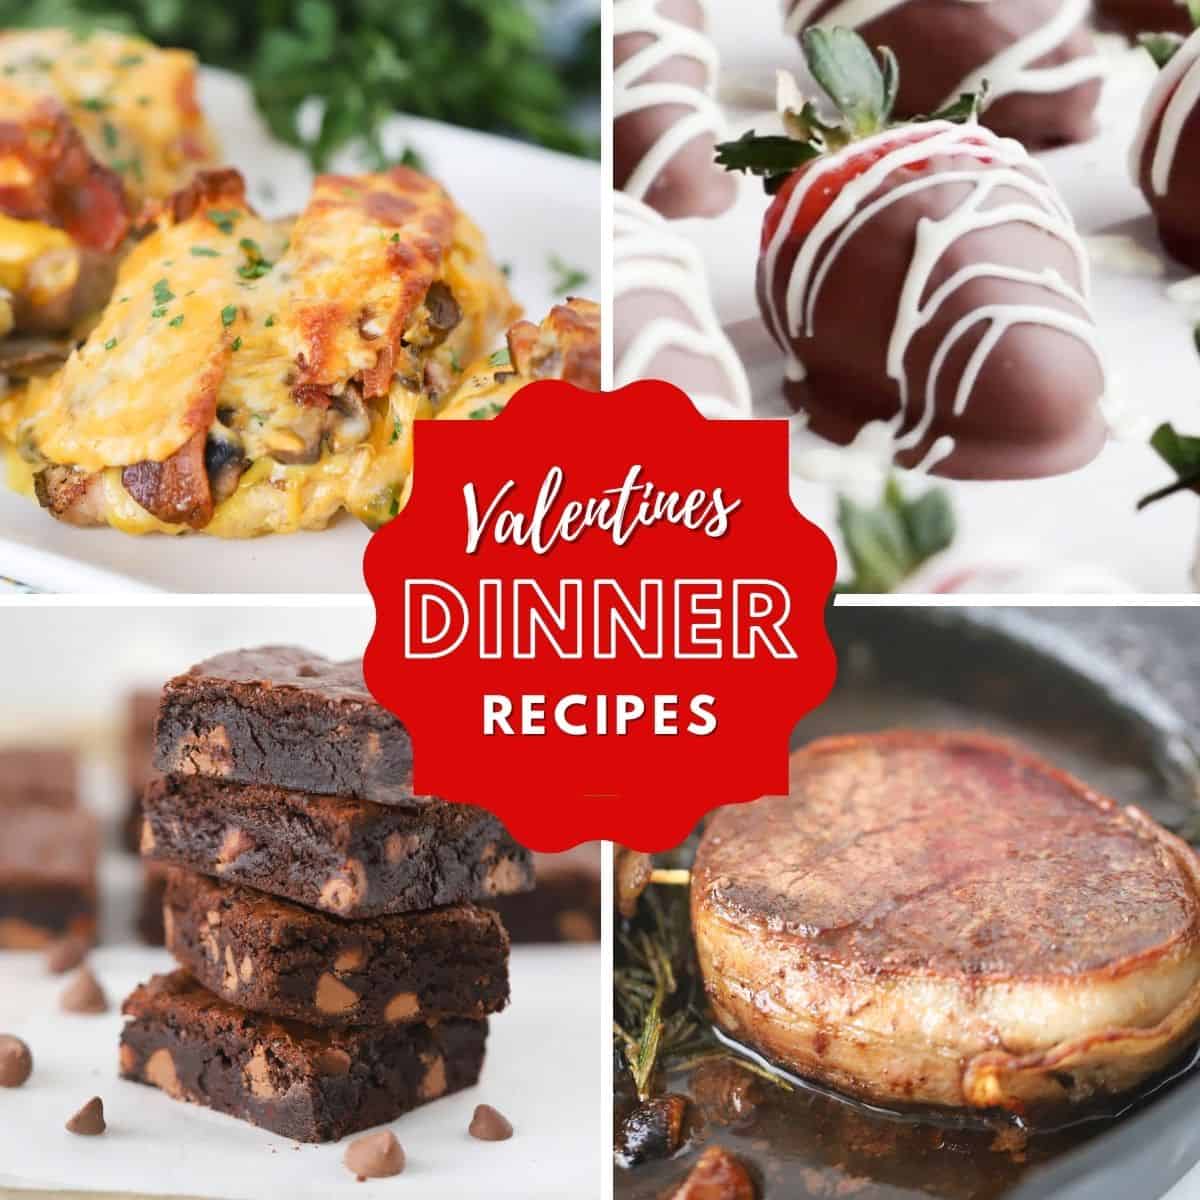 Date Night Dinner ideas, valentines dinner recipes. Valentines day dinner at home.